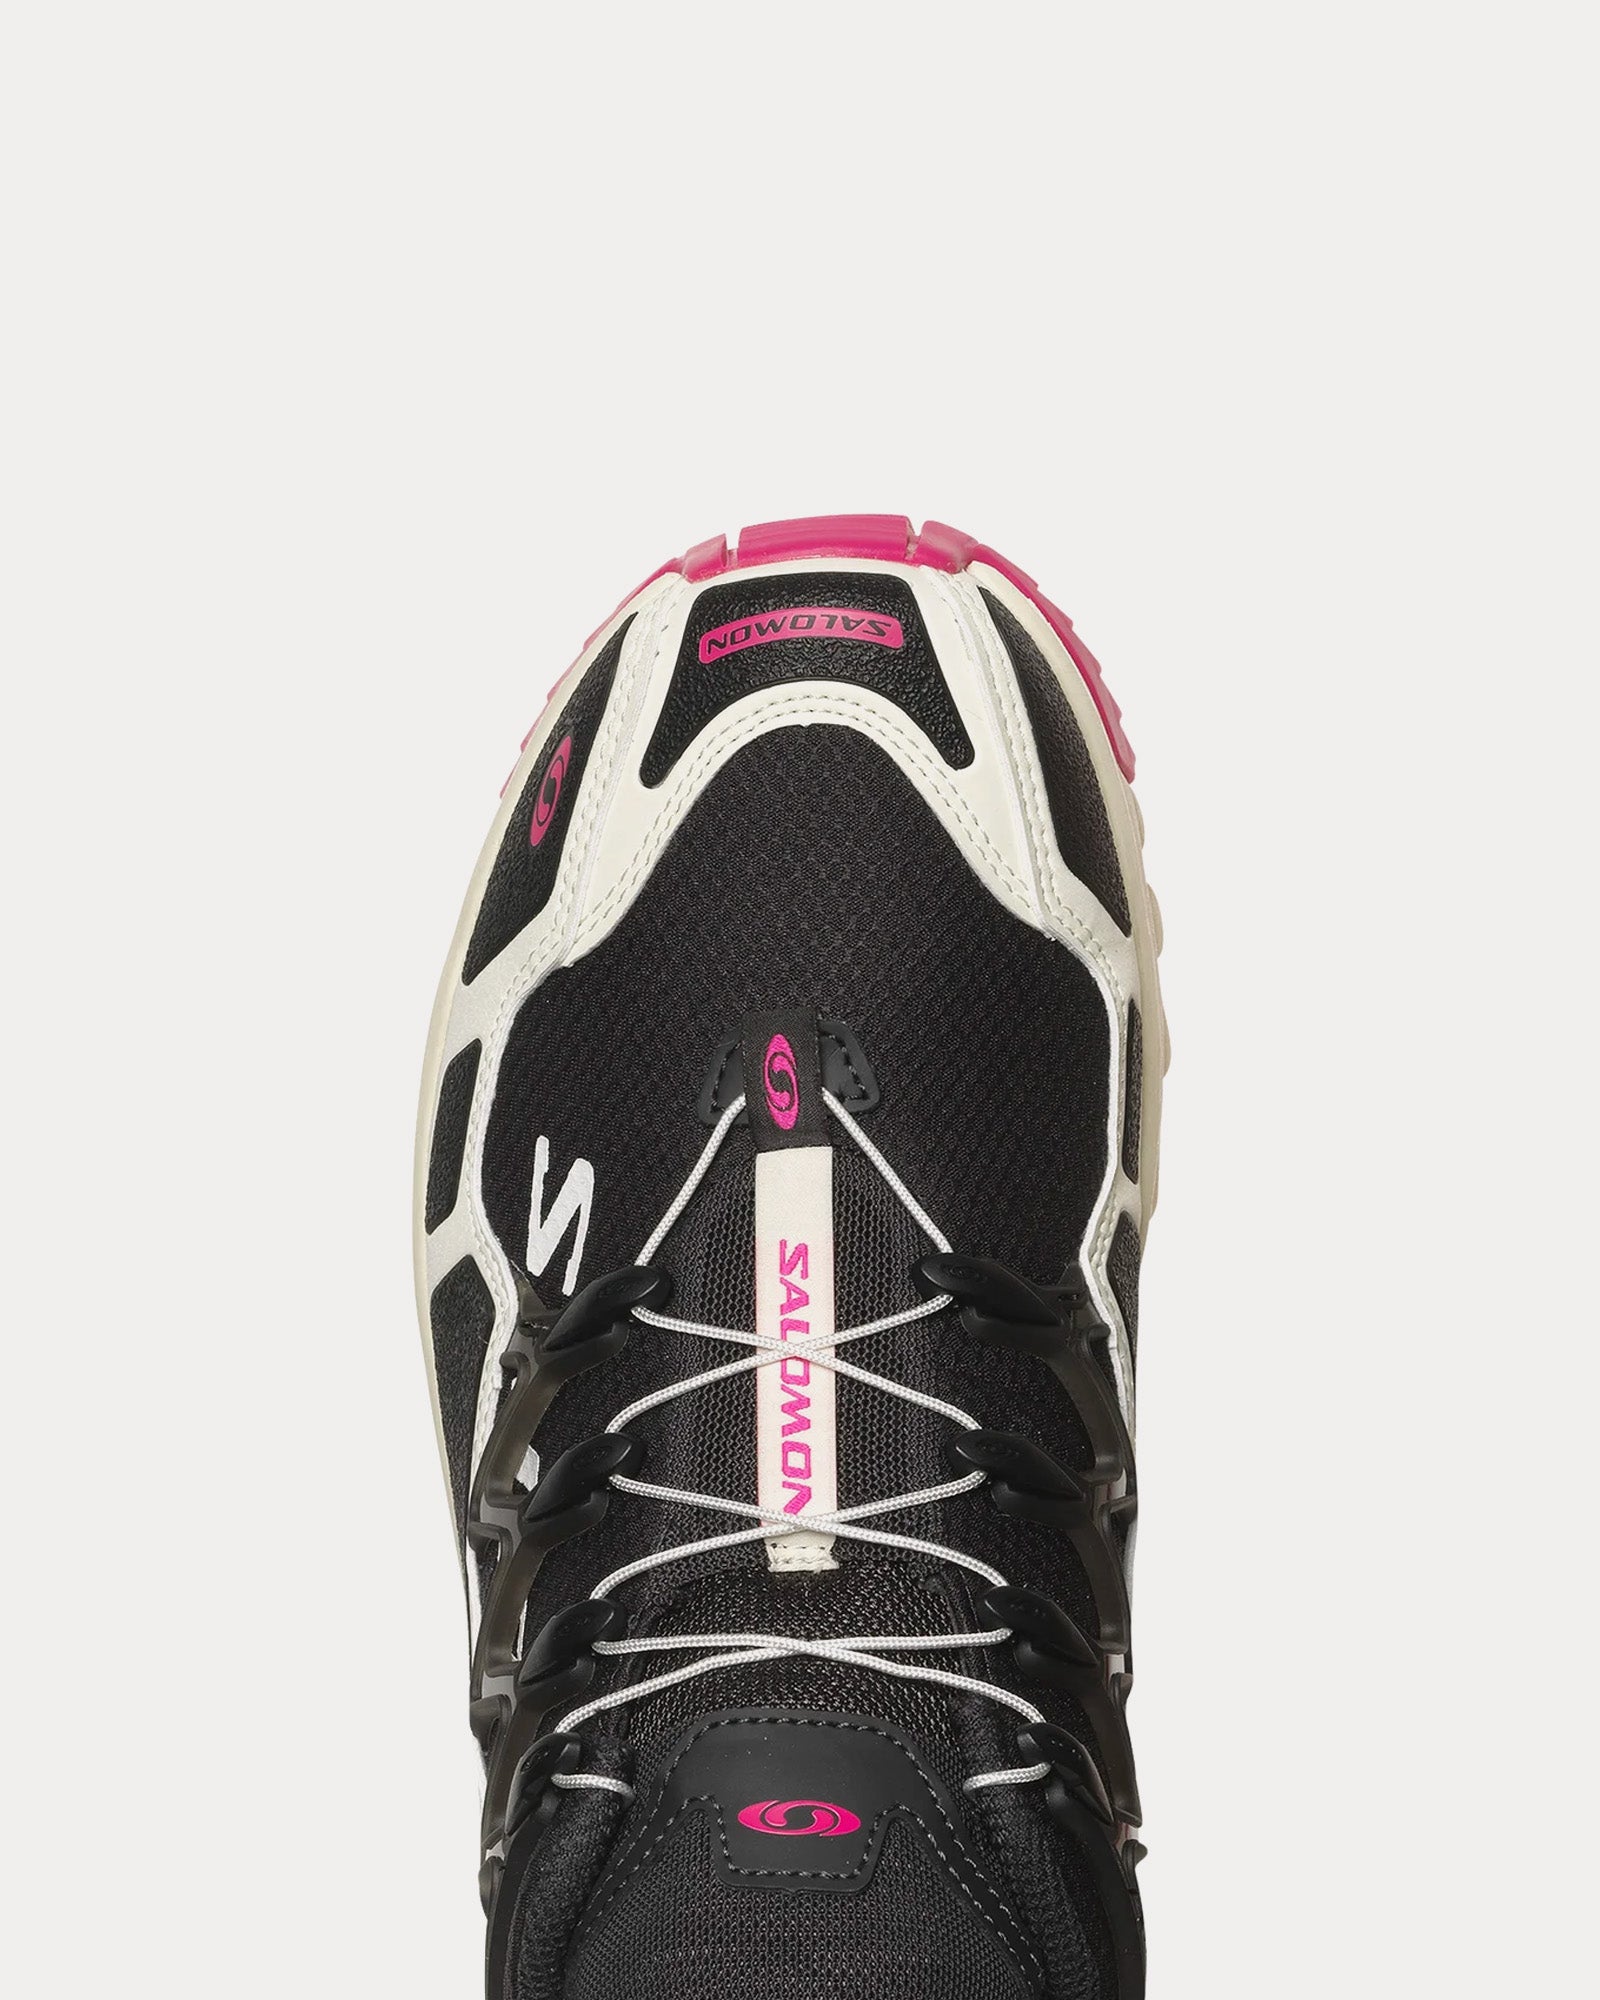 Salomon - ACS + Heritage Pack Black / Vanilla Ice / Pink Glo Low Top Sneakers